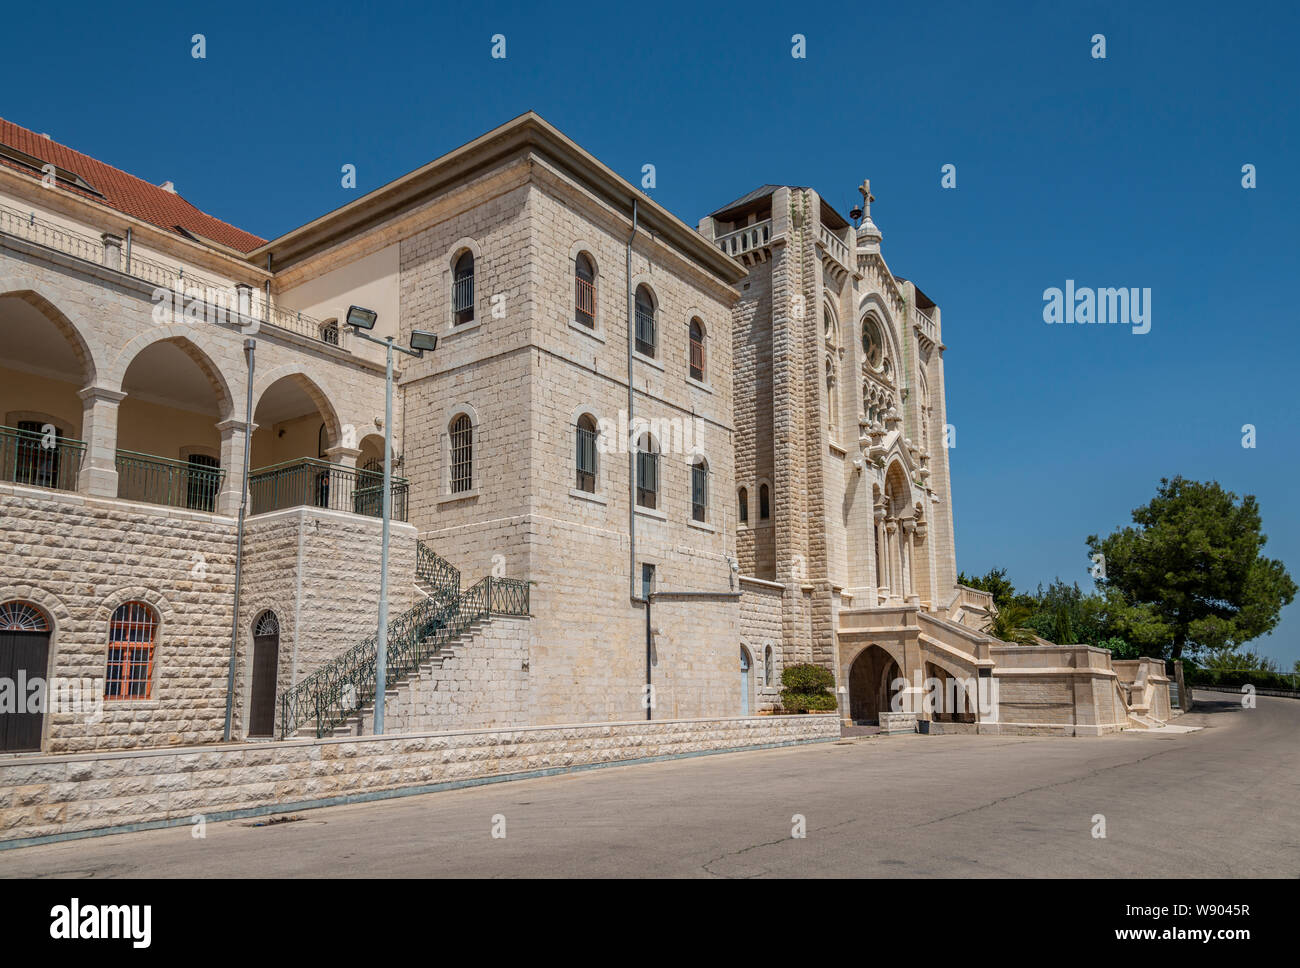 Le Don Bosco vocational high school et la basilique de jésus l'adolescent de Nazareth, Israël Banque D'Images